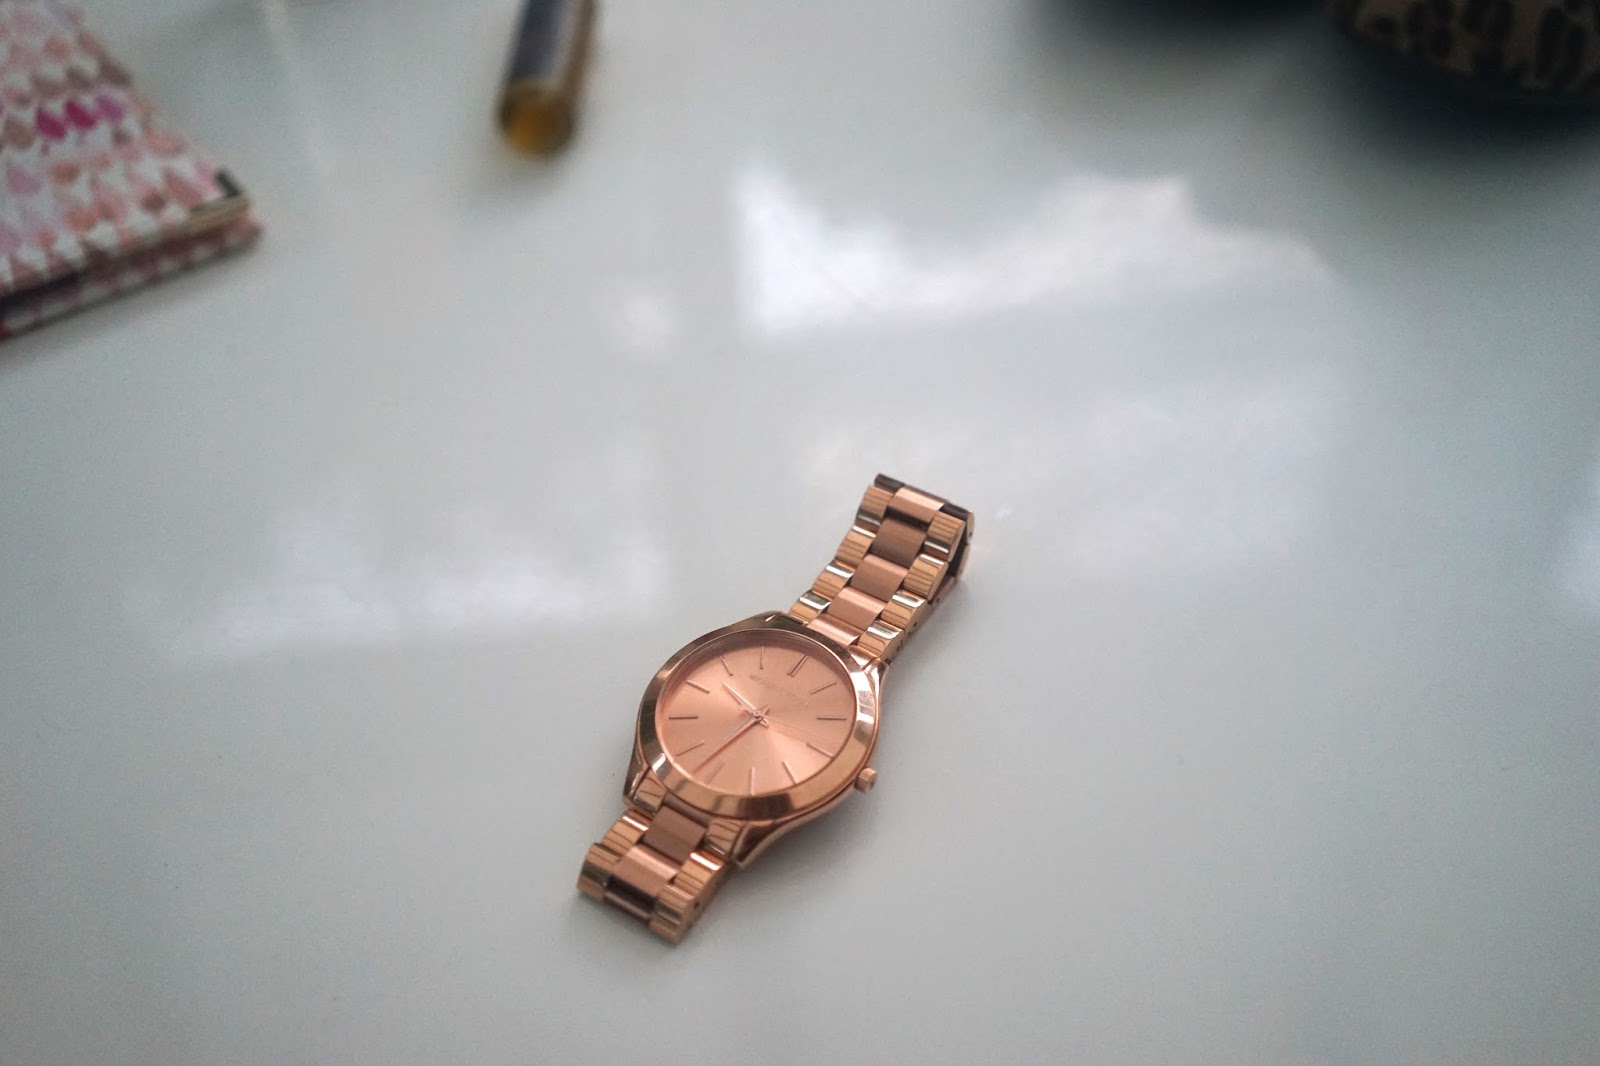 Michael Kors rose gold watch